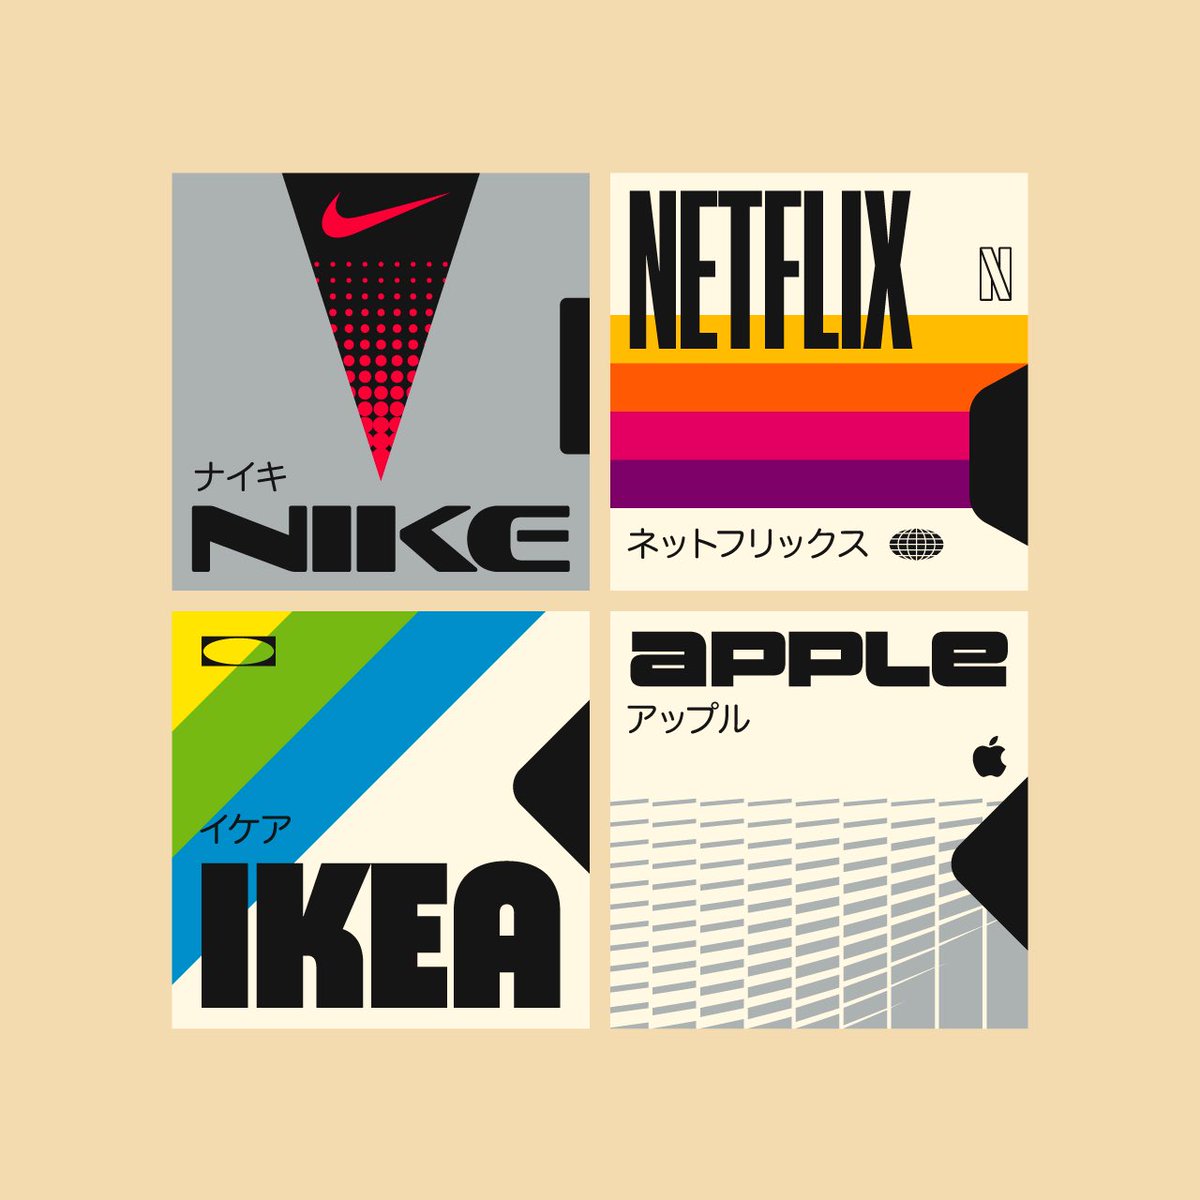 Choose your favorite. 
.
.
.
#logos #faelpt #retro #lettering #typography #typeface #logo #typedesign #typematters #type #design #graphicdesign